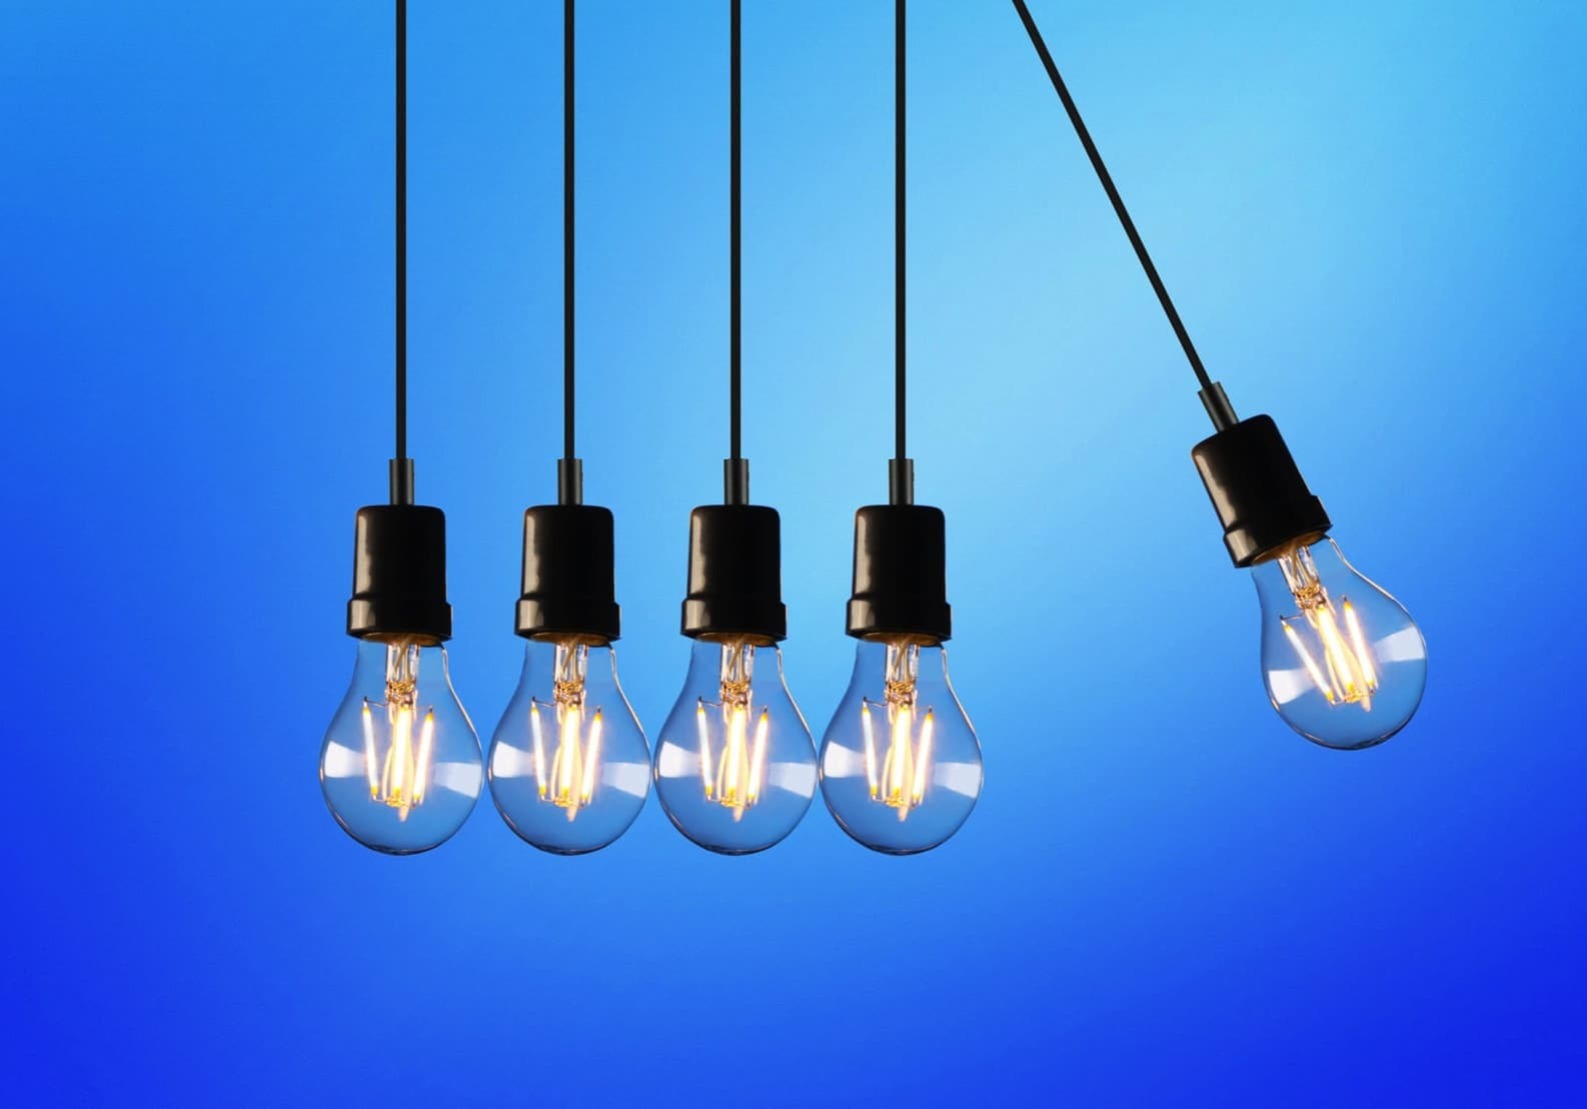 Five electric light bulbs